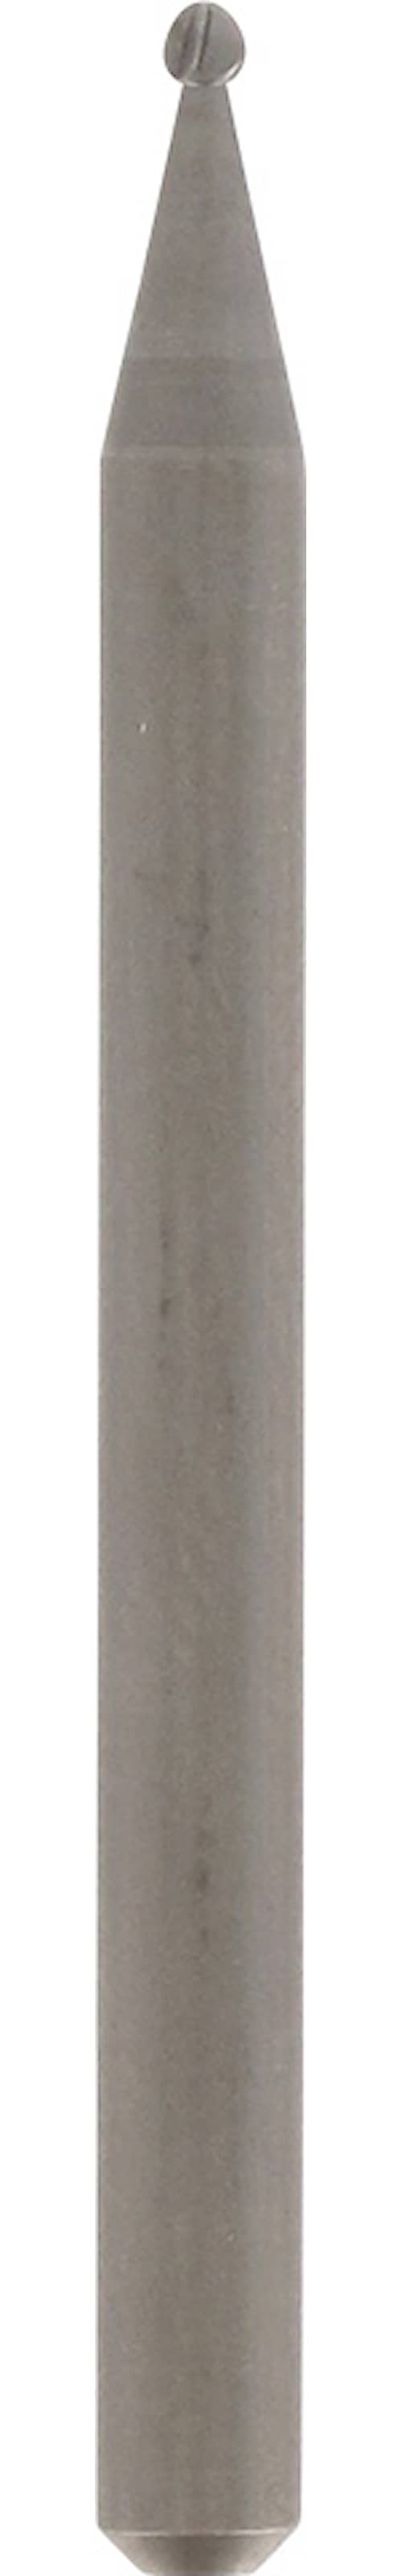 Dremel graverestift 106JA 1,6 mm. 3 stk. pak Graverstift